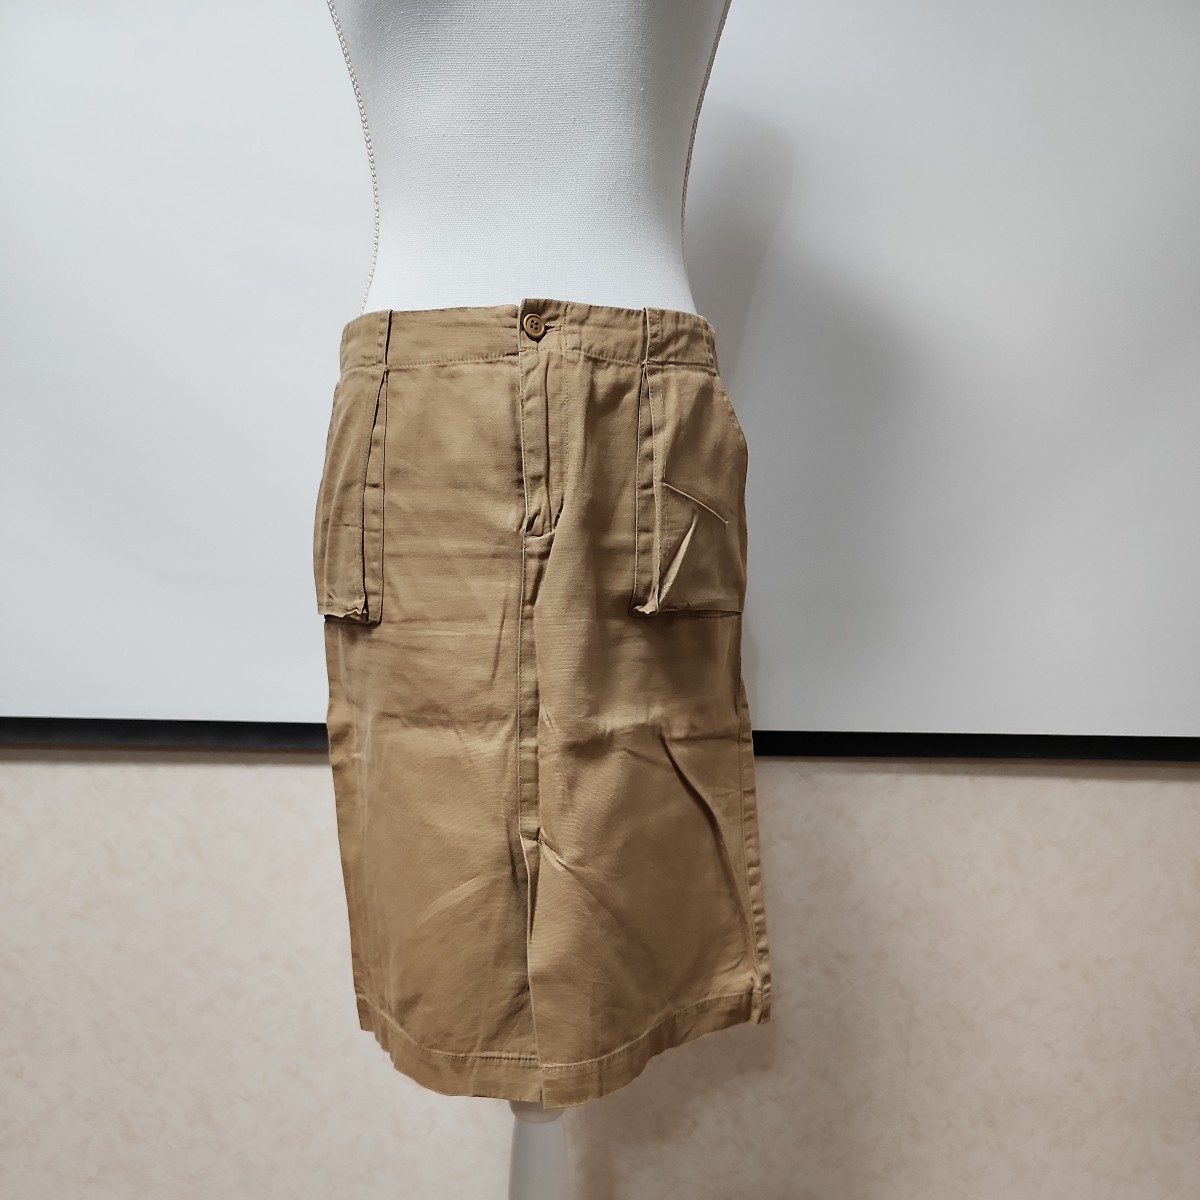  Tomorrowland McAfee узкая юбка размер 38